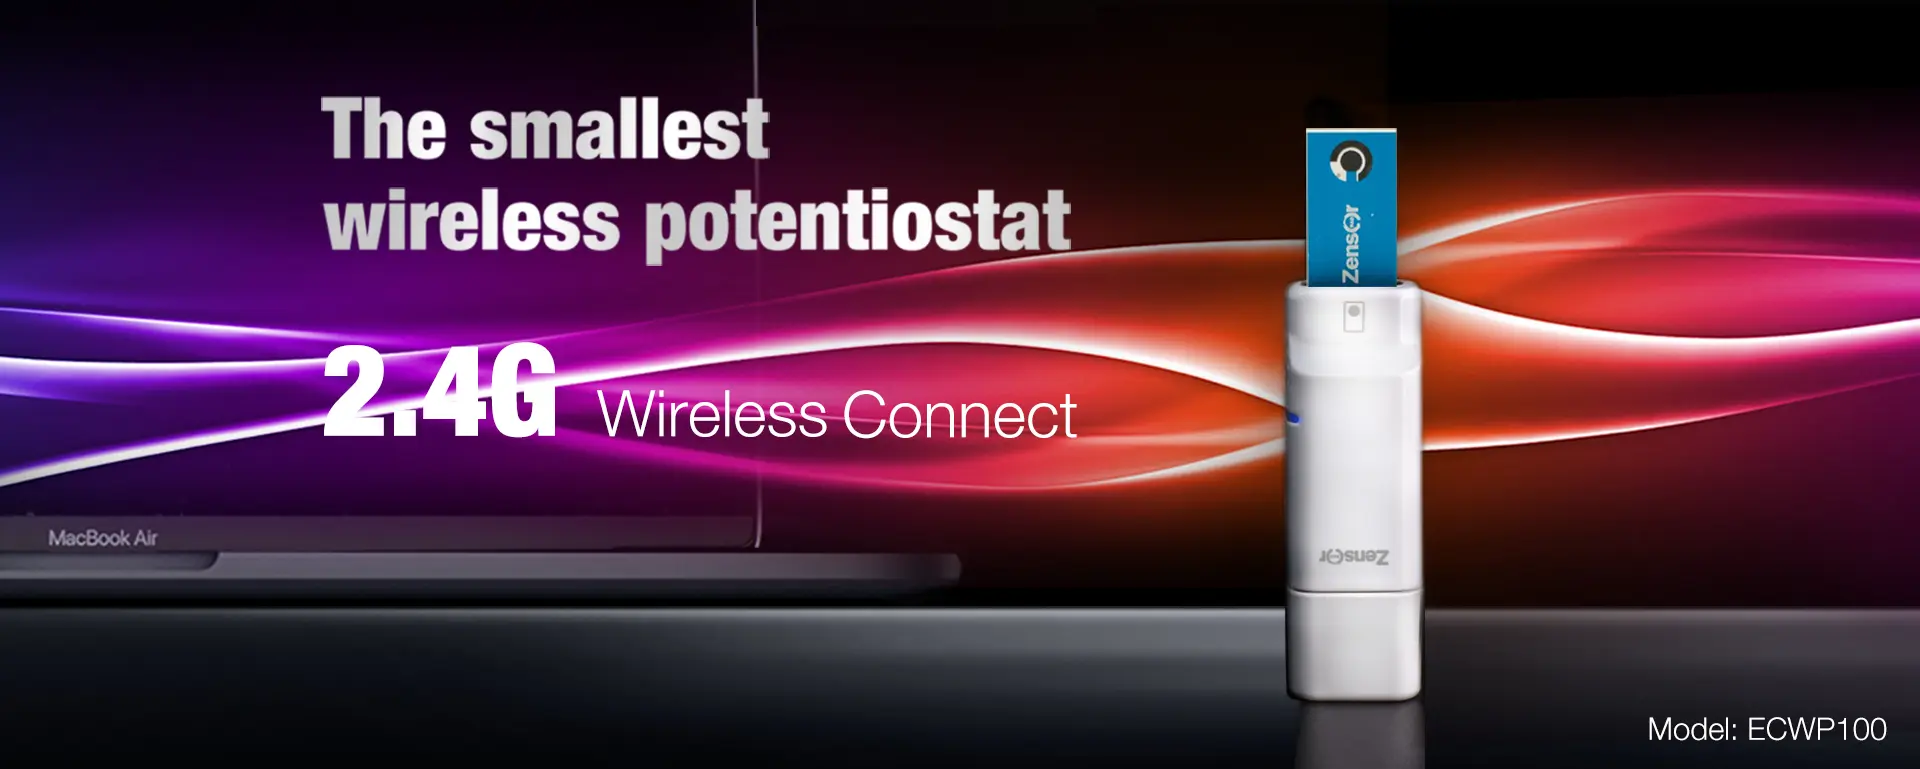 The smallest wireless
                                            potentiostat Zensor
                                            R&D-ECWP100